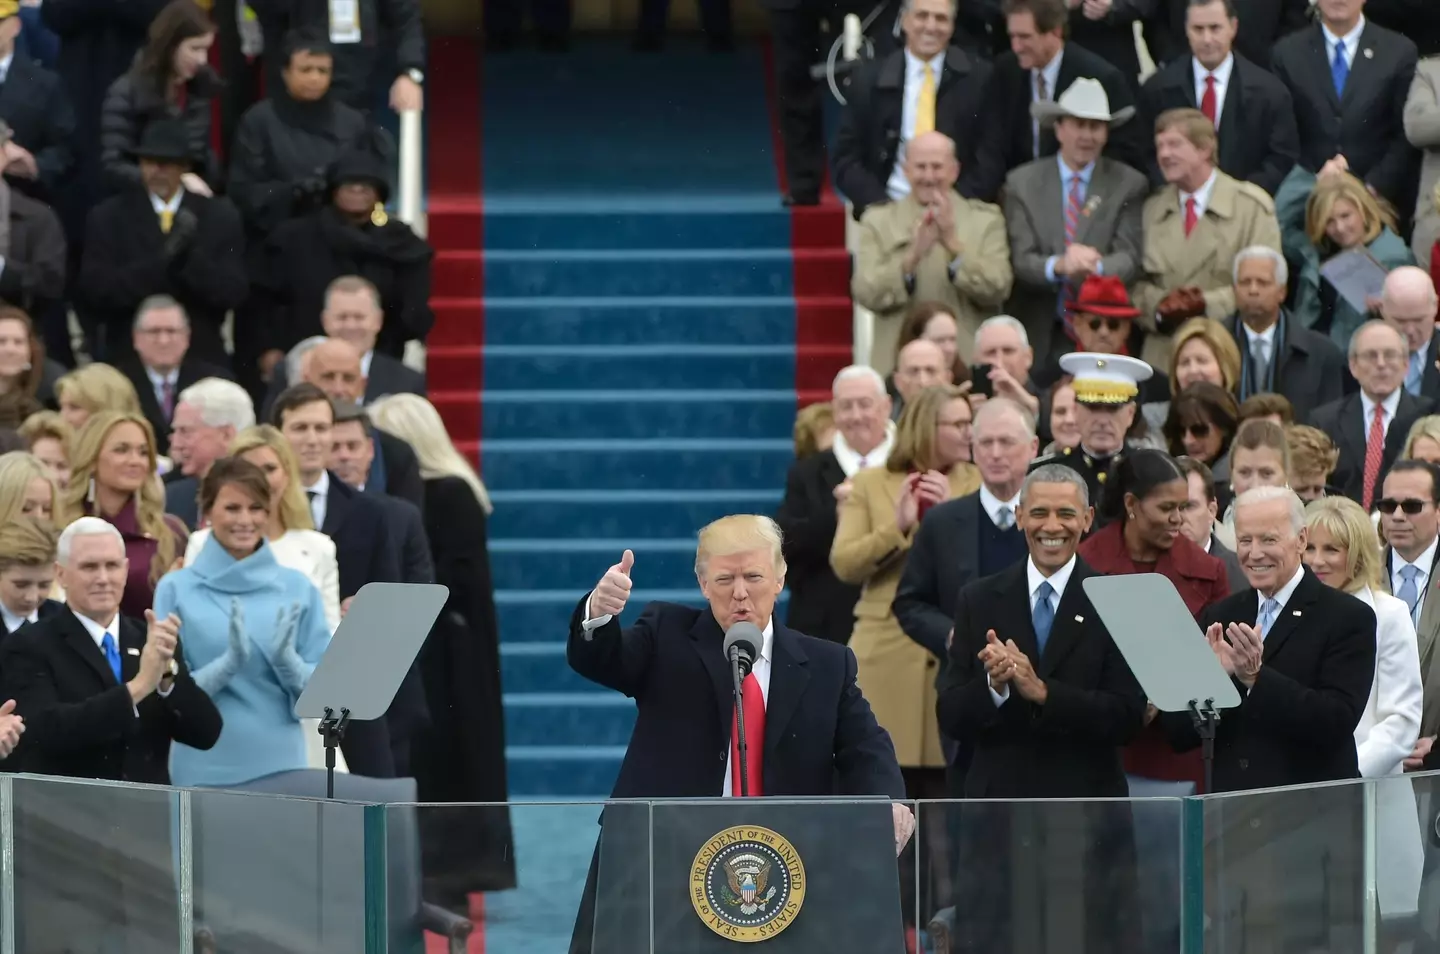 Trump was inaugurated in January 2017.